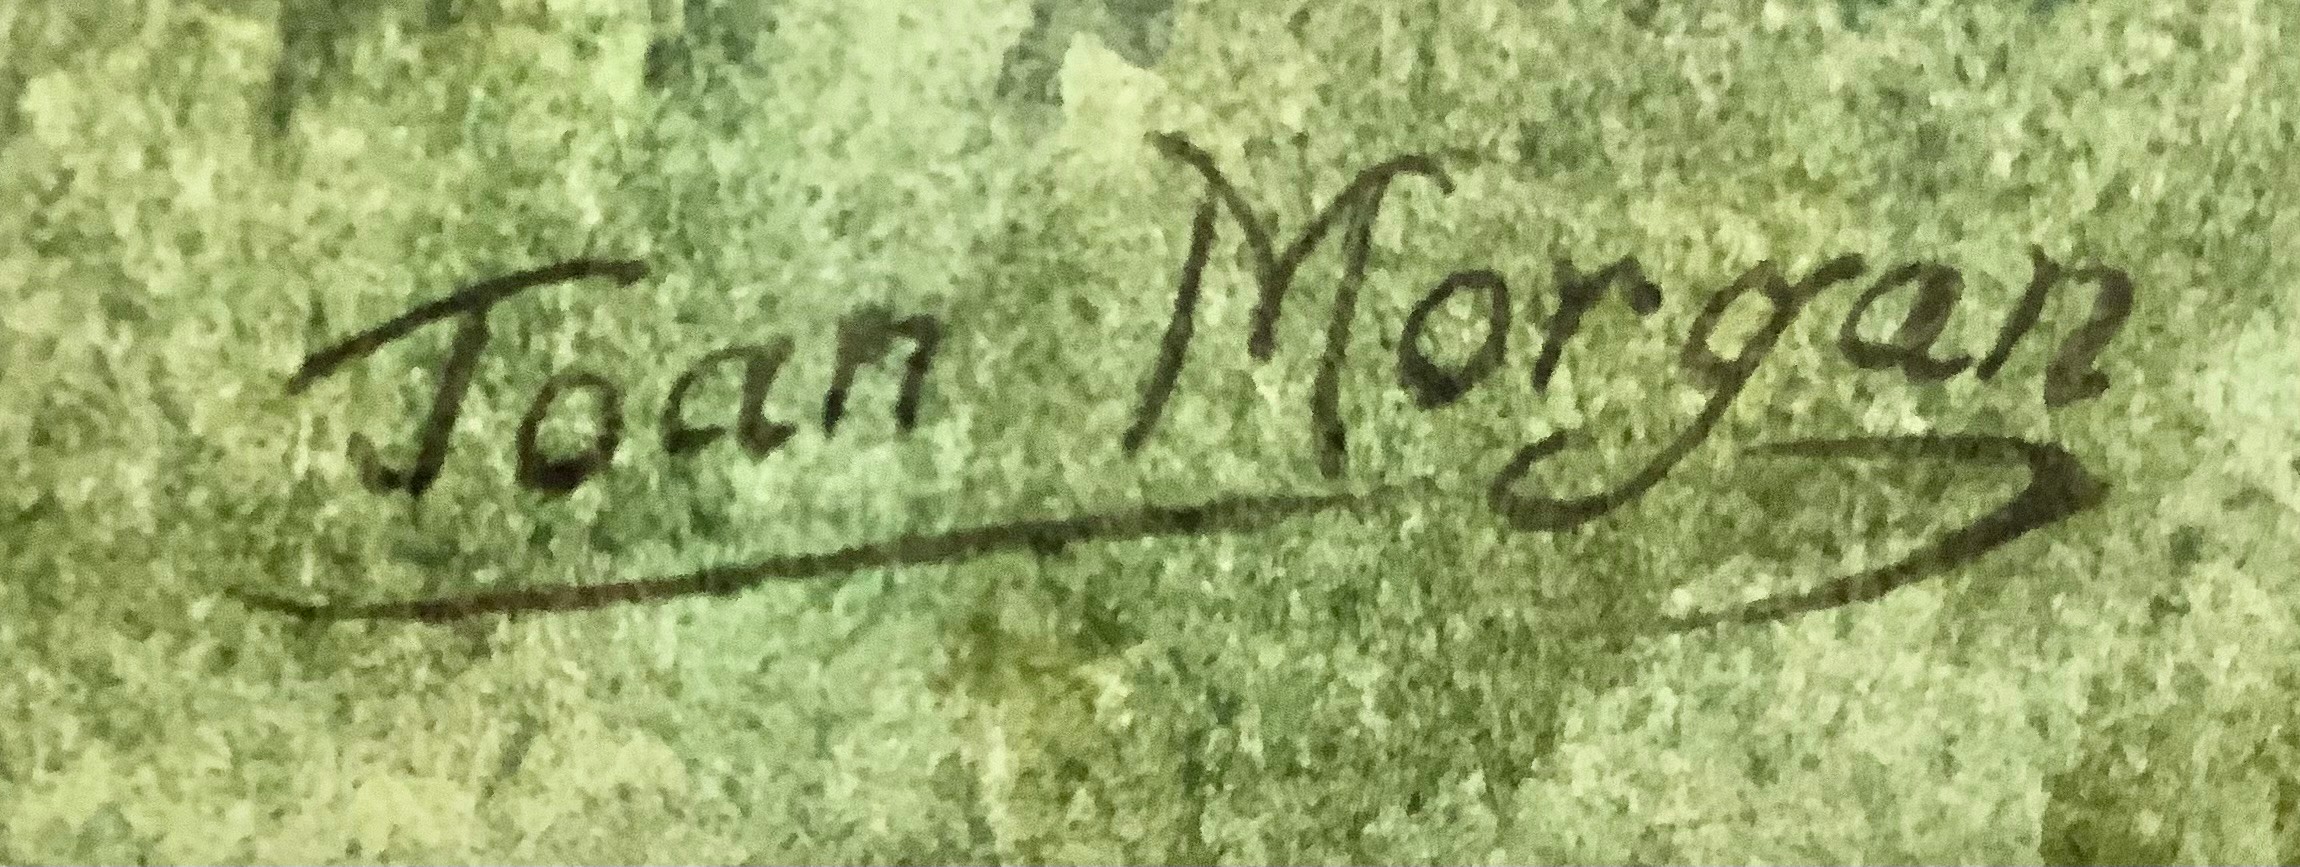 John Morgan Near Malham Cove signed, watercolour, 25cm x 35cm; another, FF Errill, Old Radnor, - Image 2 of 3